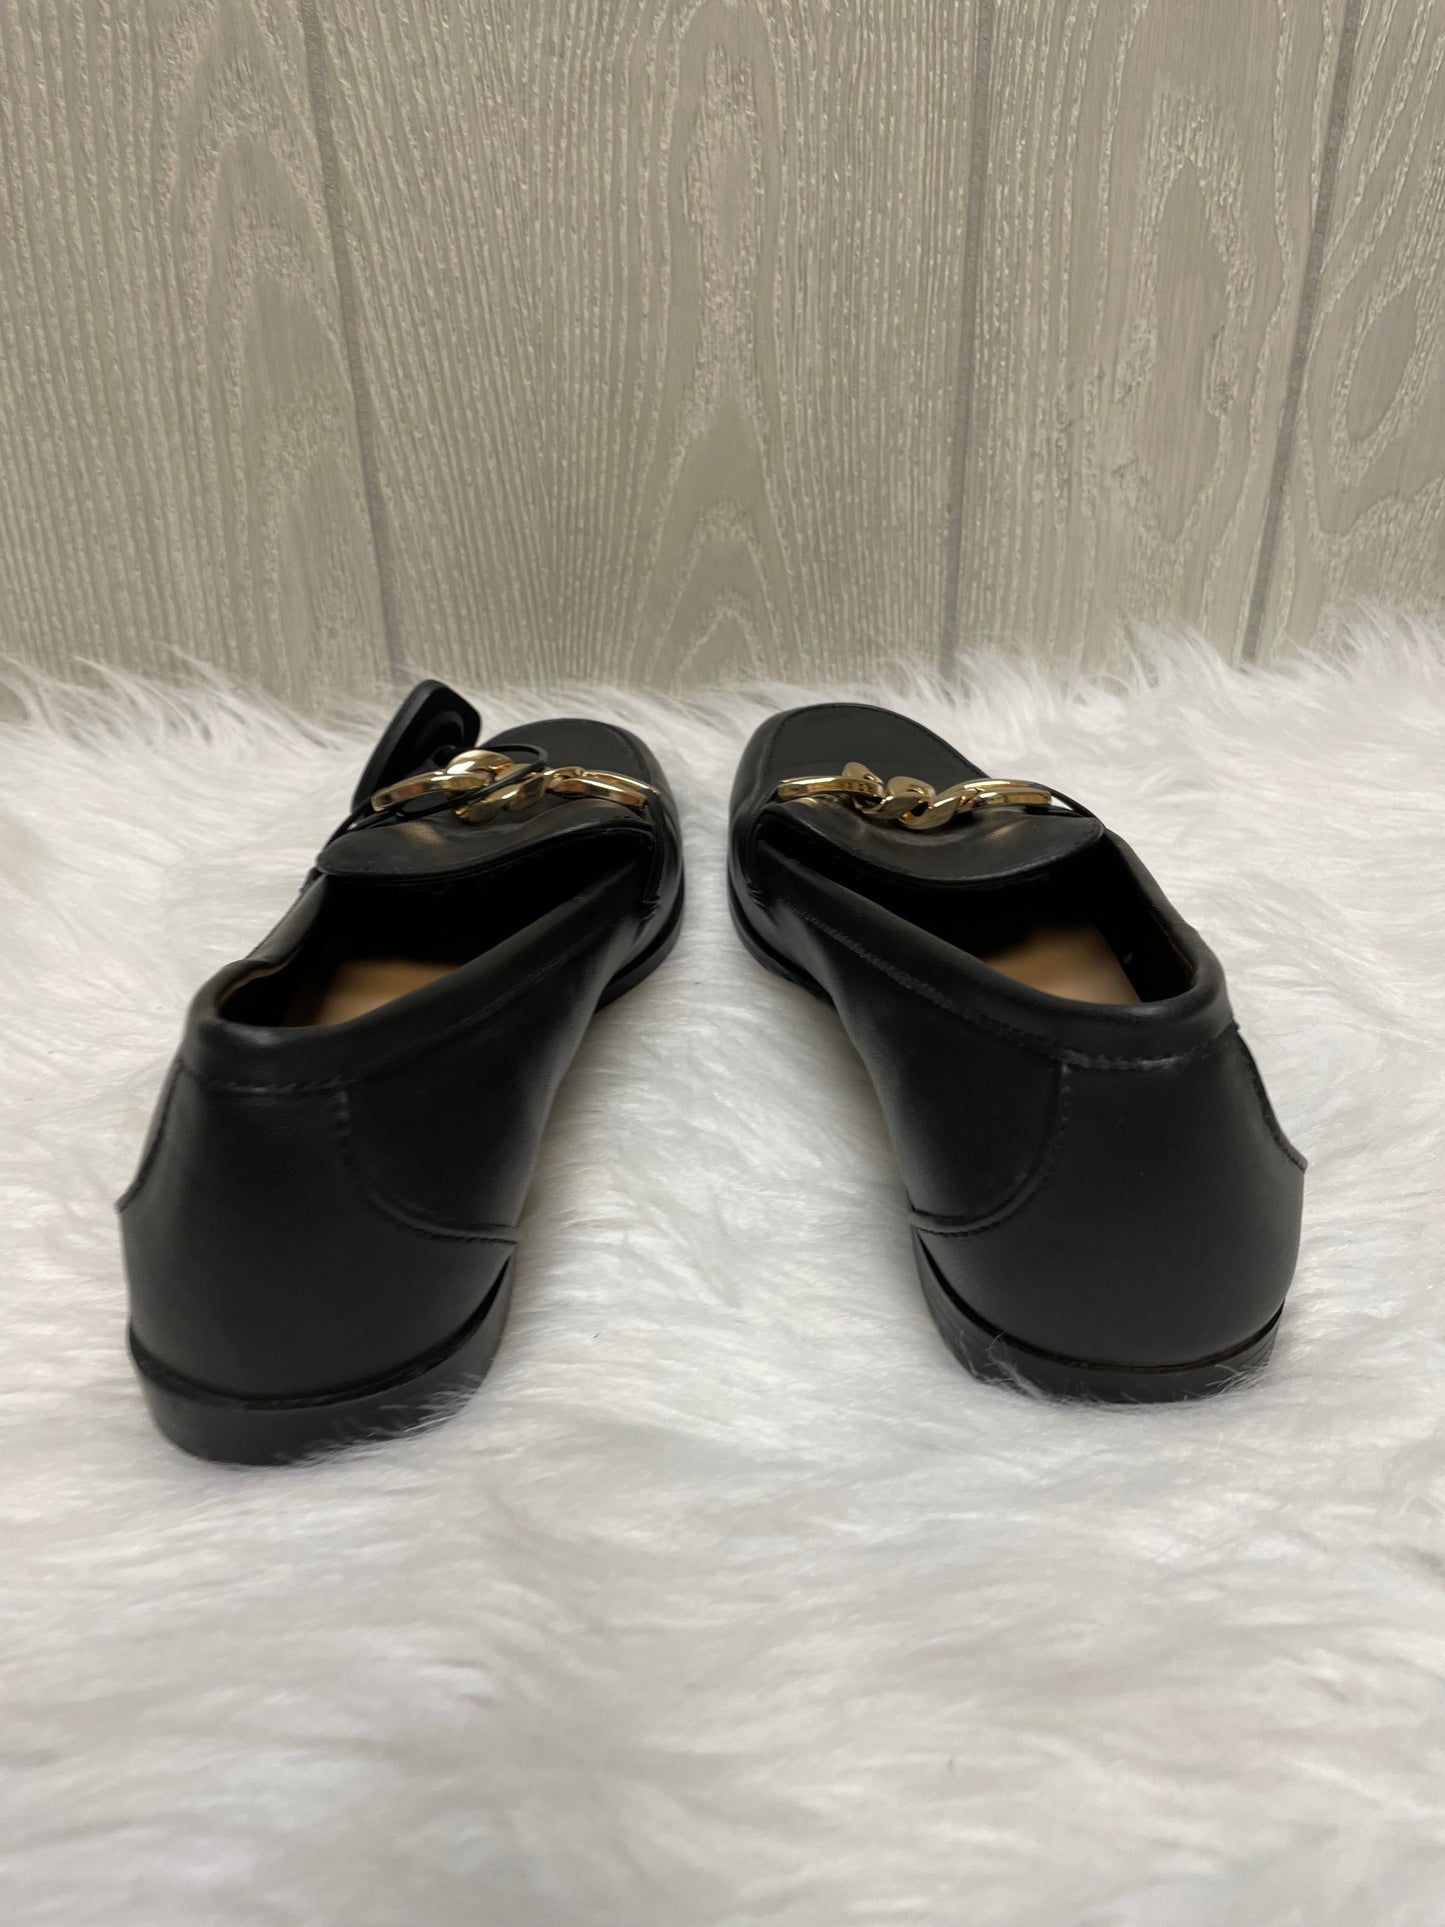 Black & Gold Shoes Heels Block H&m, Size 7.5